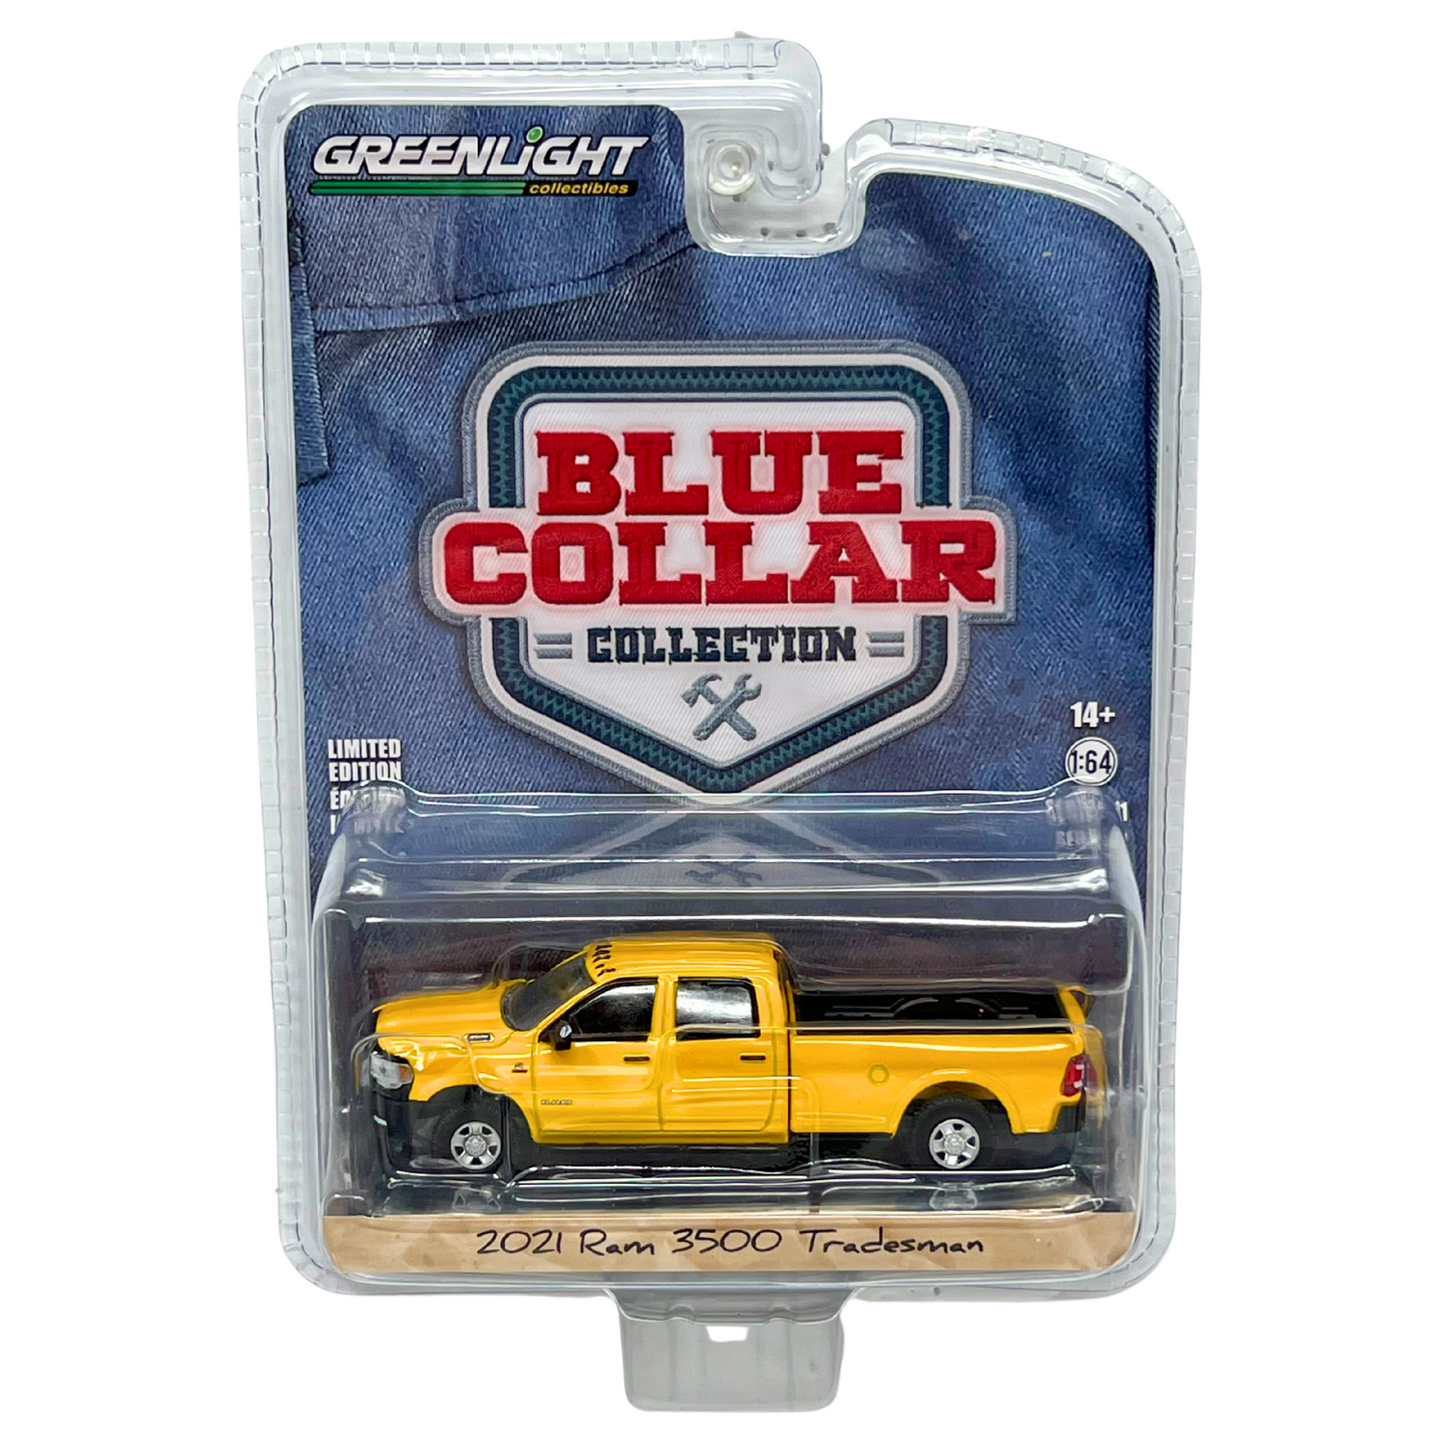 Greenlight Blue Collar Collection 2021 Dodge Ram 3500 Tradesman 1:64 Diecast